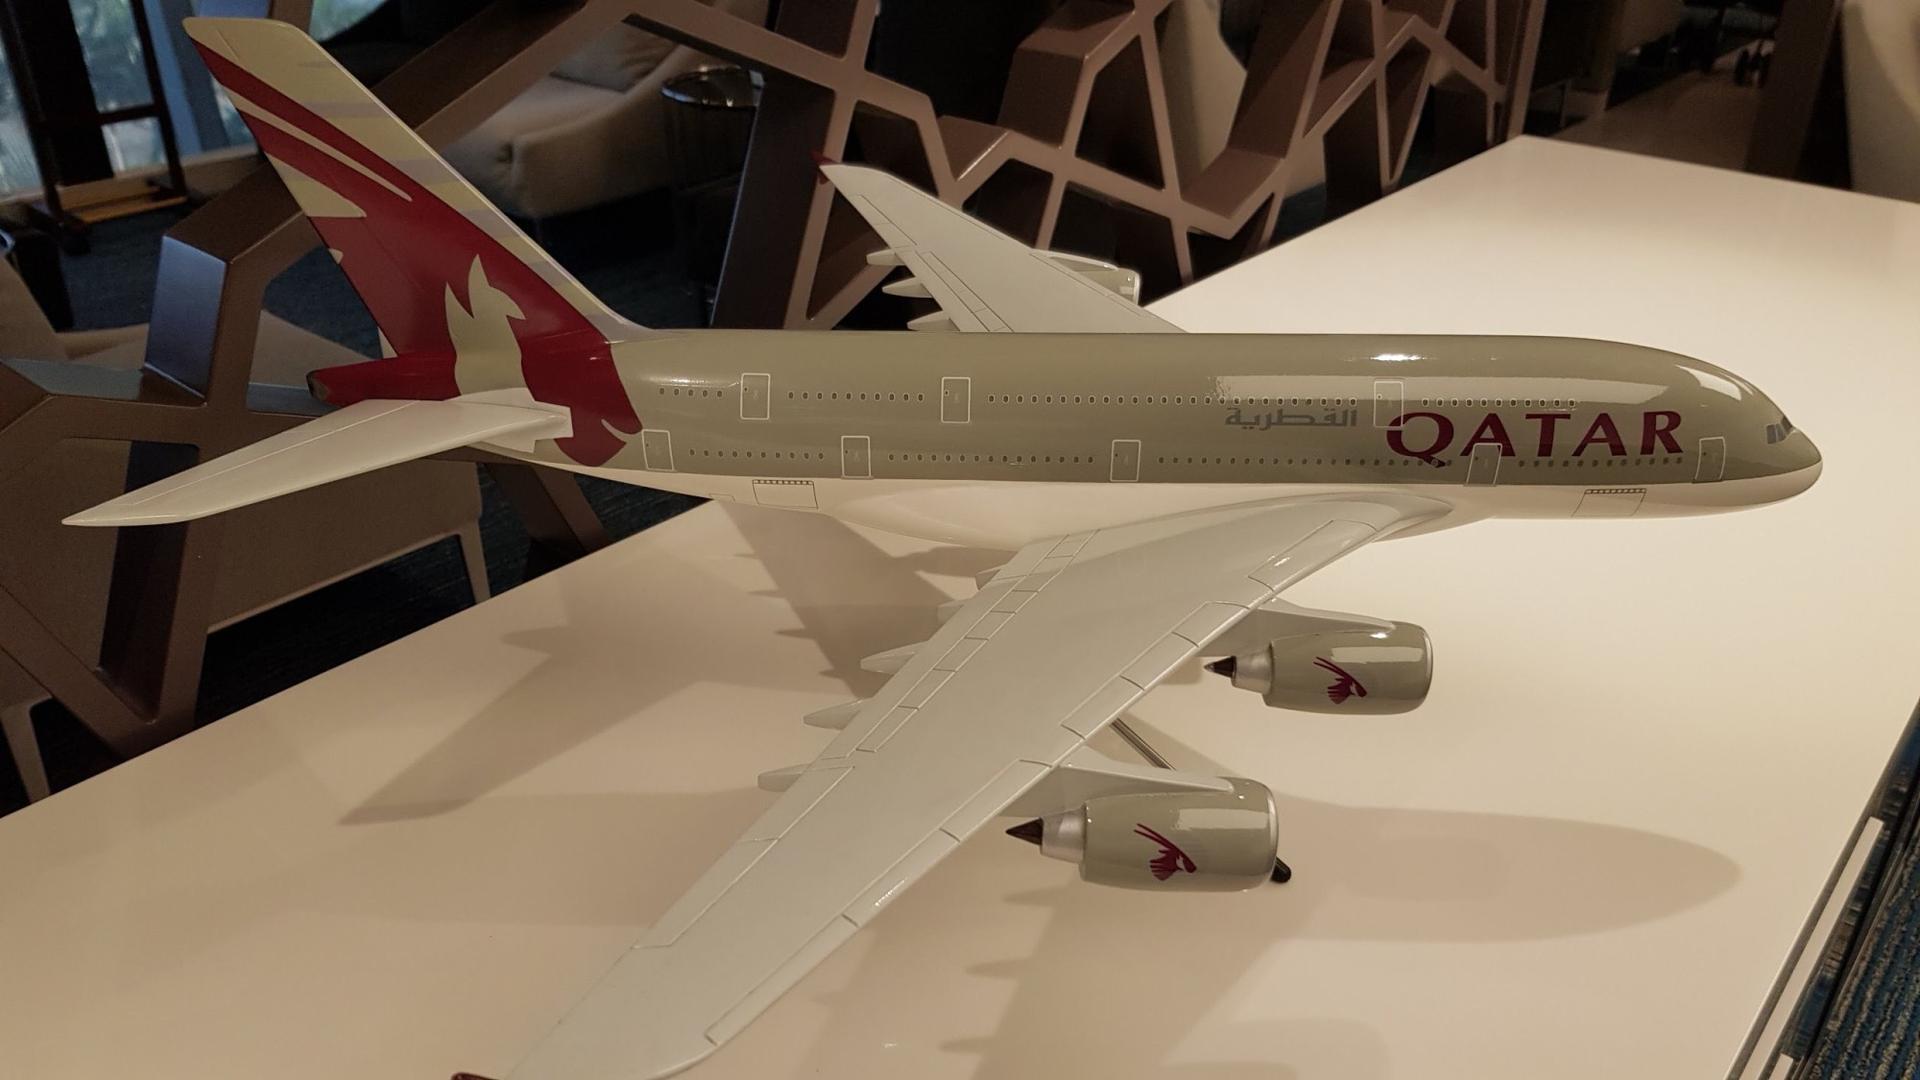 Qatar Airways Premium Lounge image 15 of 52